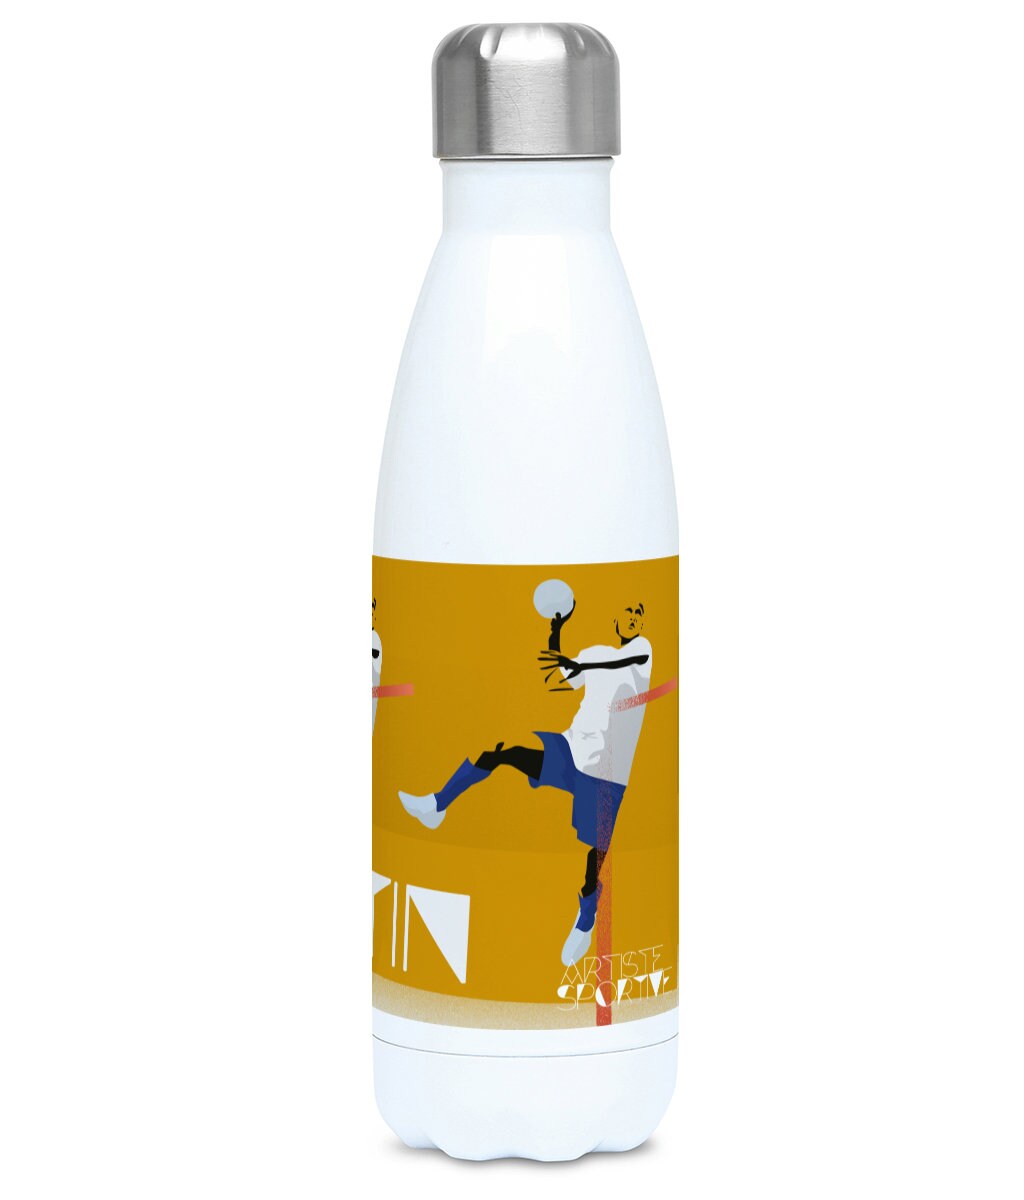 Men's handball insulated bottle "Martin the handball player" - Customizable